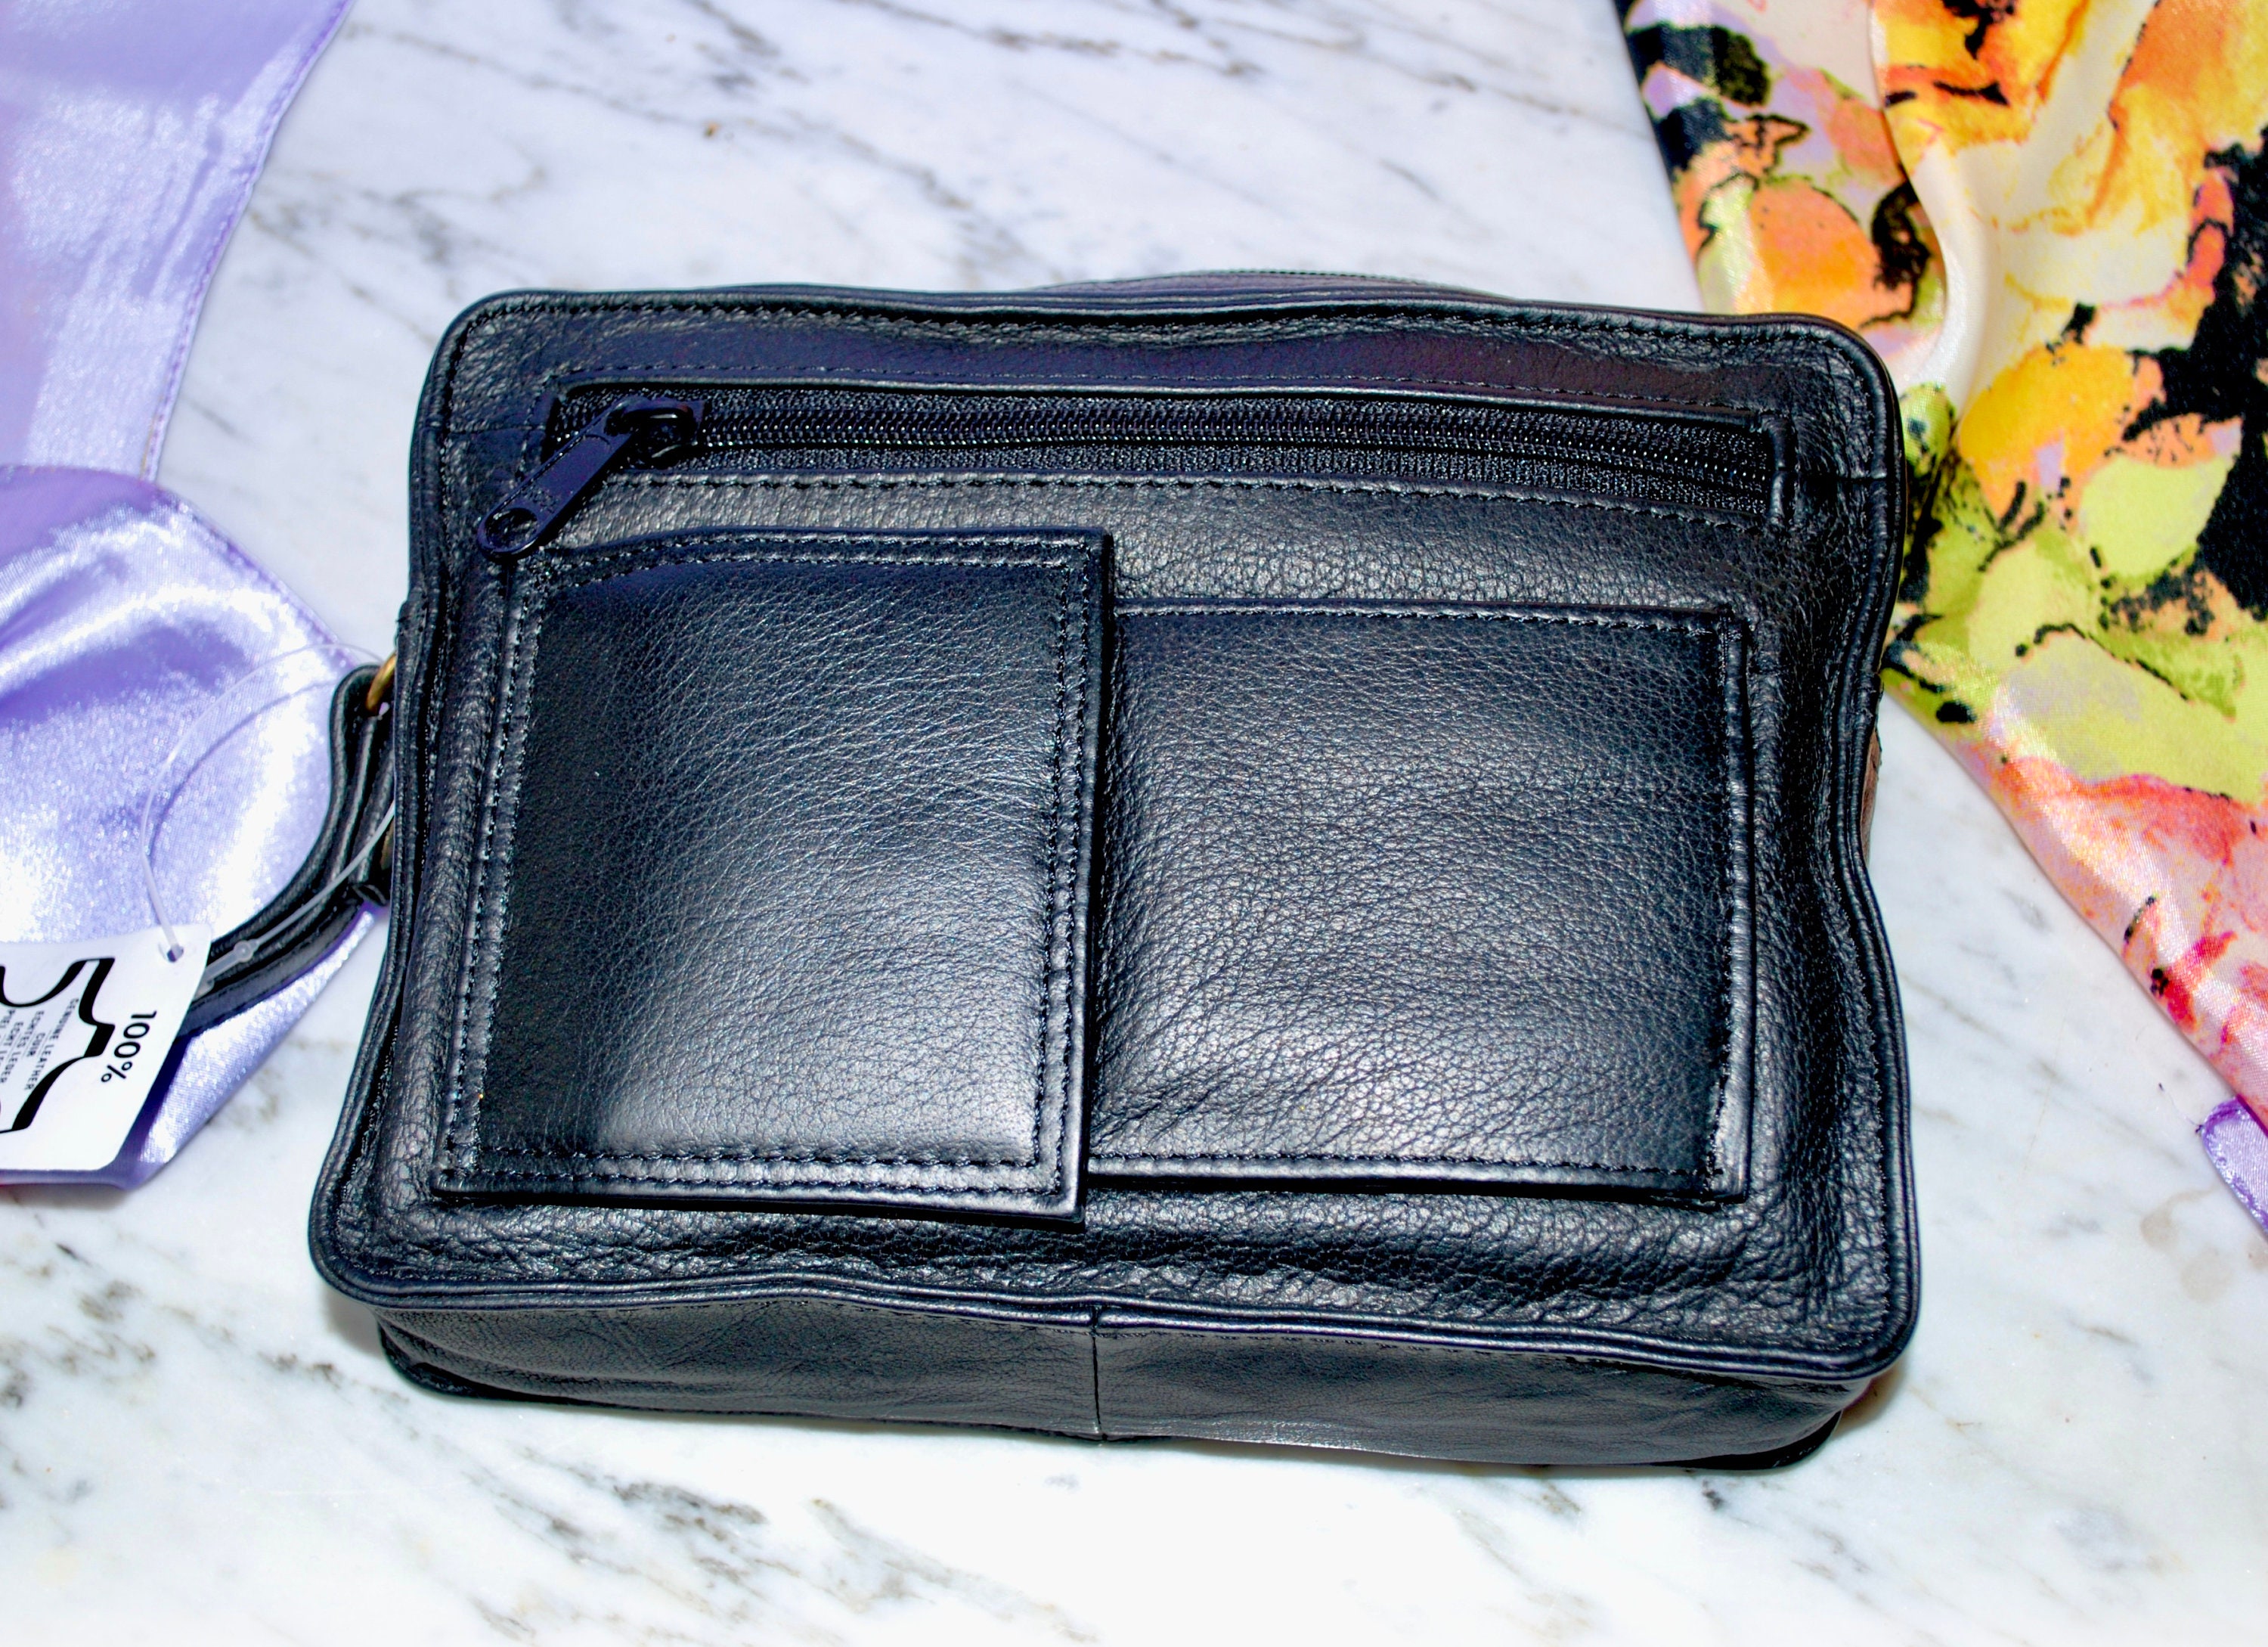 Pocket Organiser - Luxury Small Leather Goods - Personalisation, Men M60502